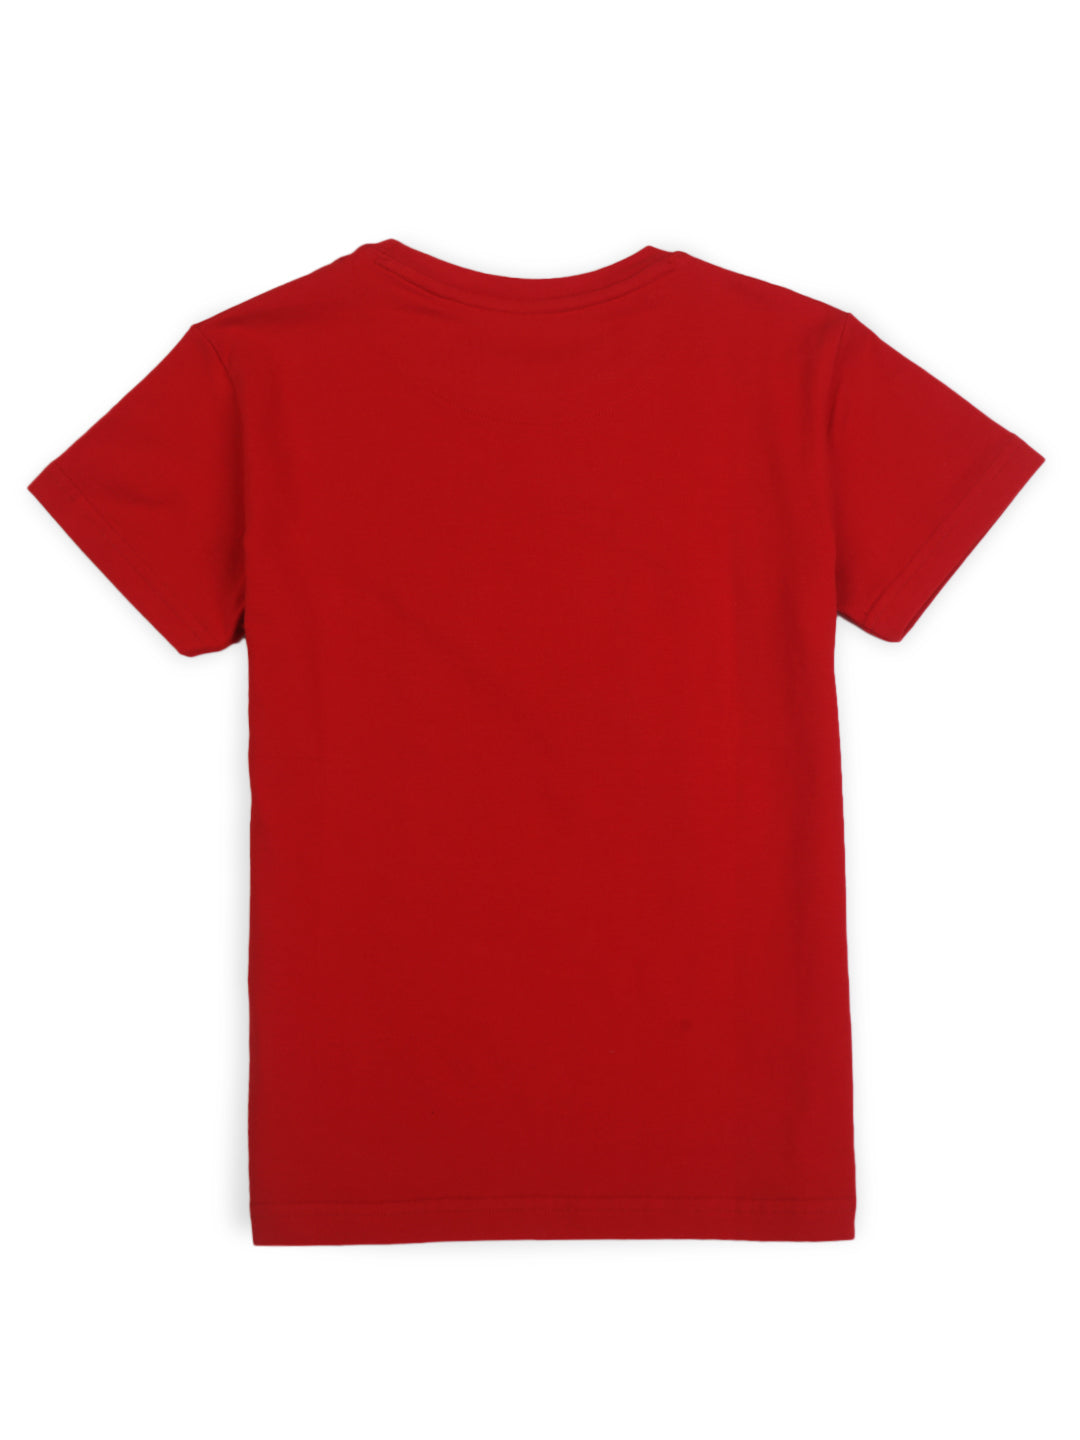 Boys Red Printed  Cotton T-Shirt